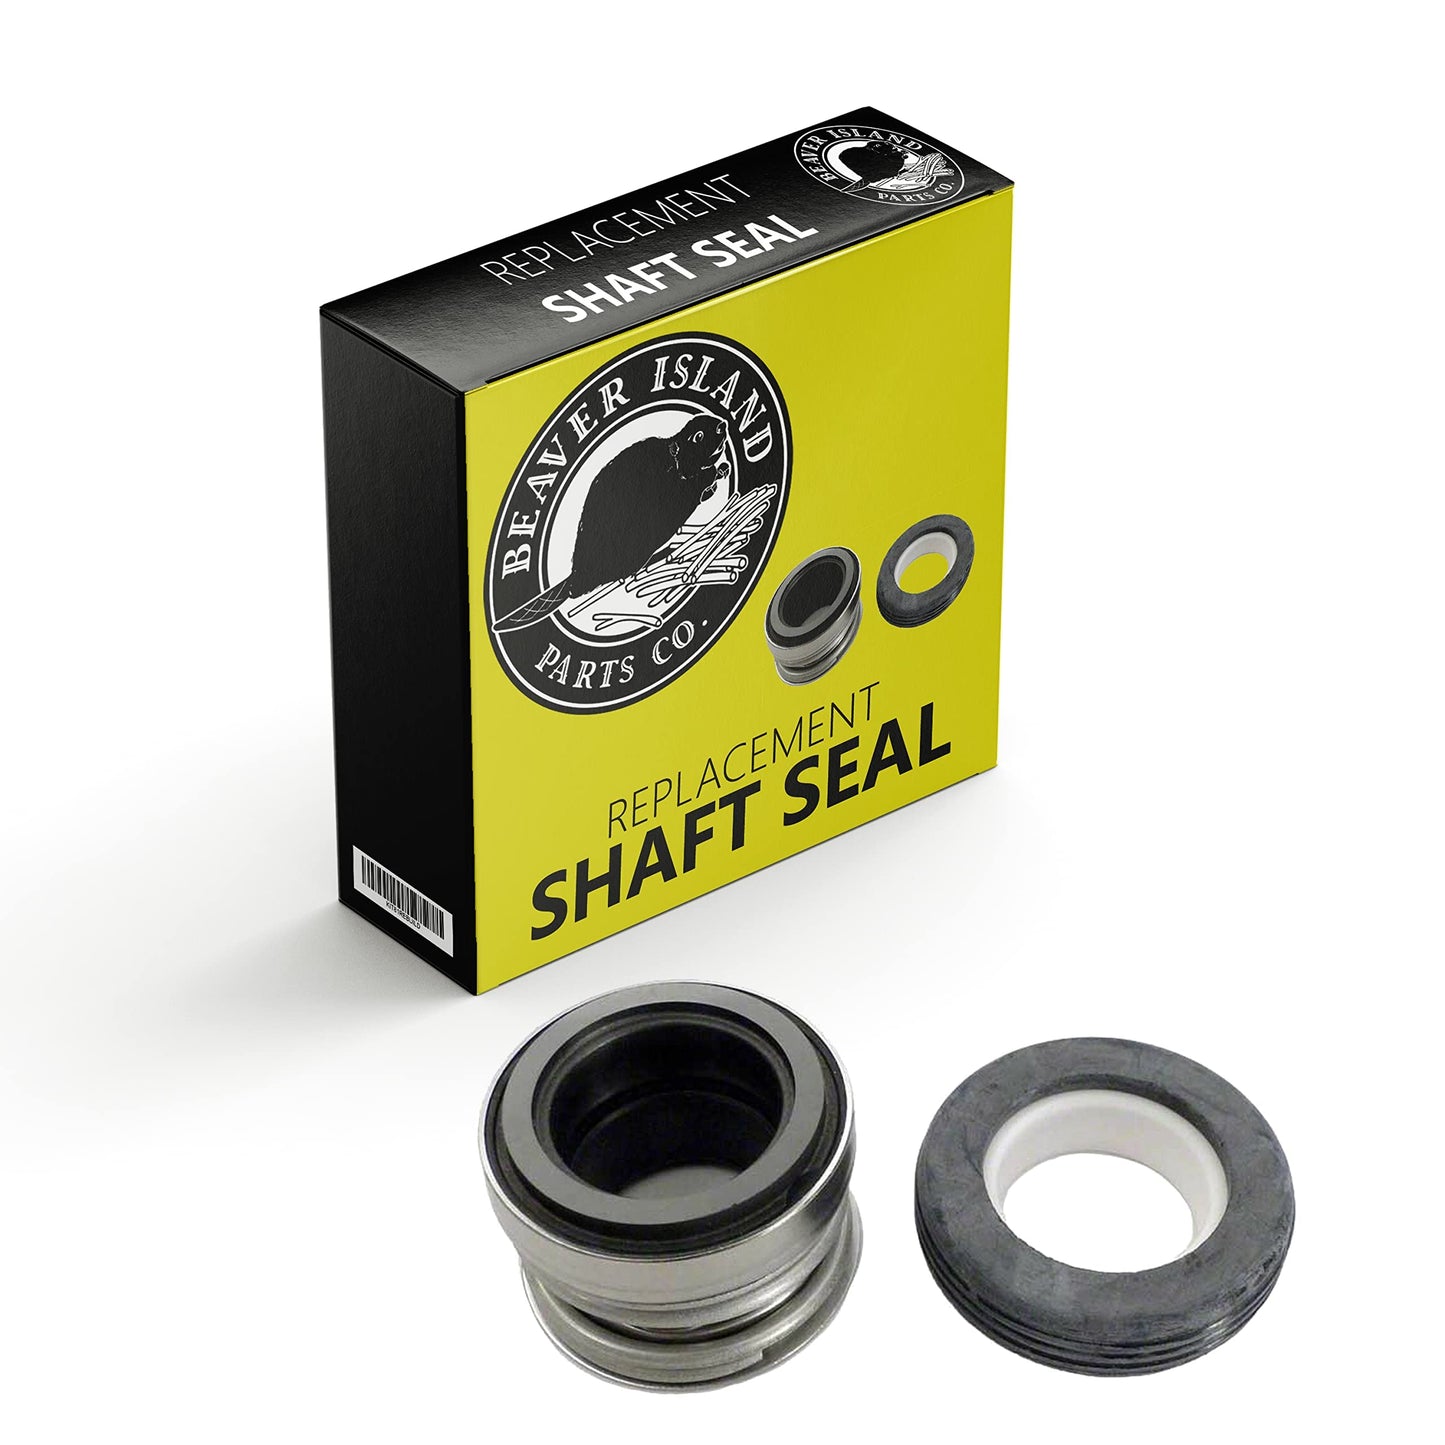 Shaft Seal Replacement for Pentair Sta-Rite Industries Swim-Quip XL Series 37407-0009 Pump Motor Mechanical Seal